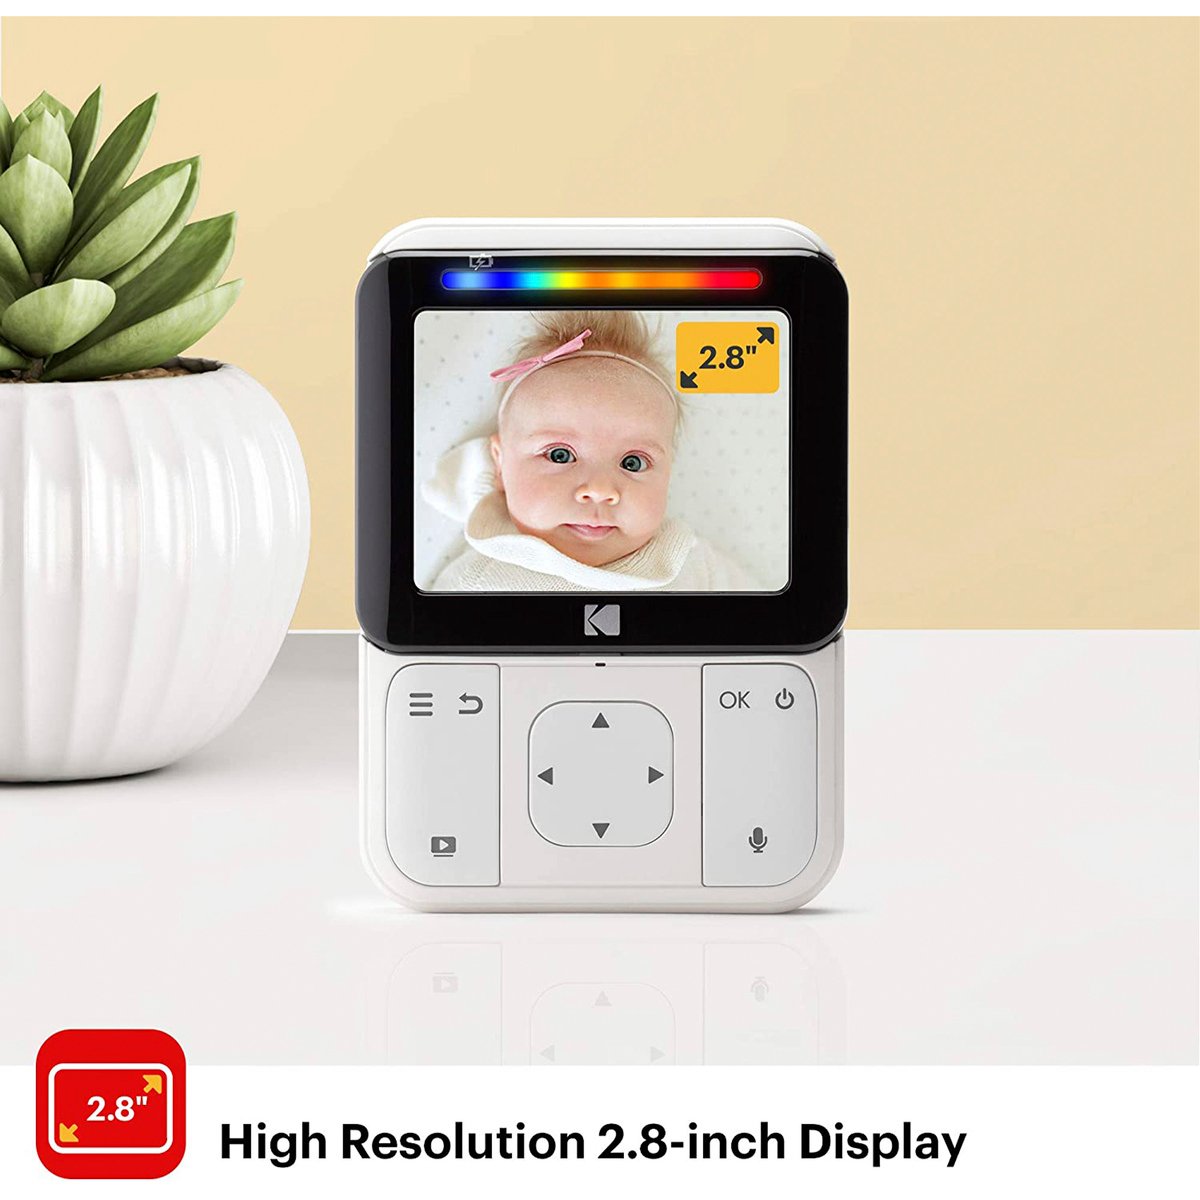 KODAK Cherish C220 Video Baby Monitor